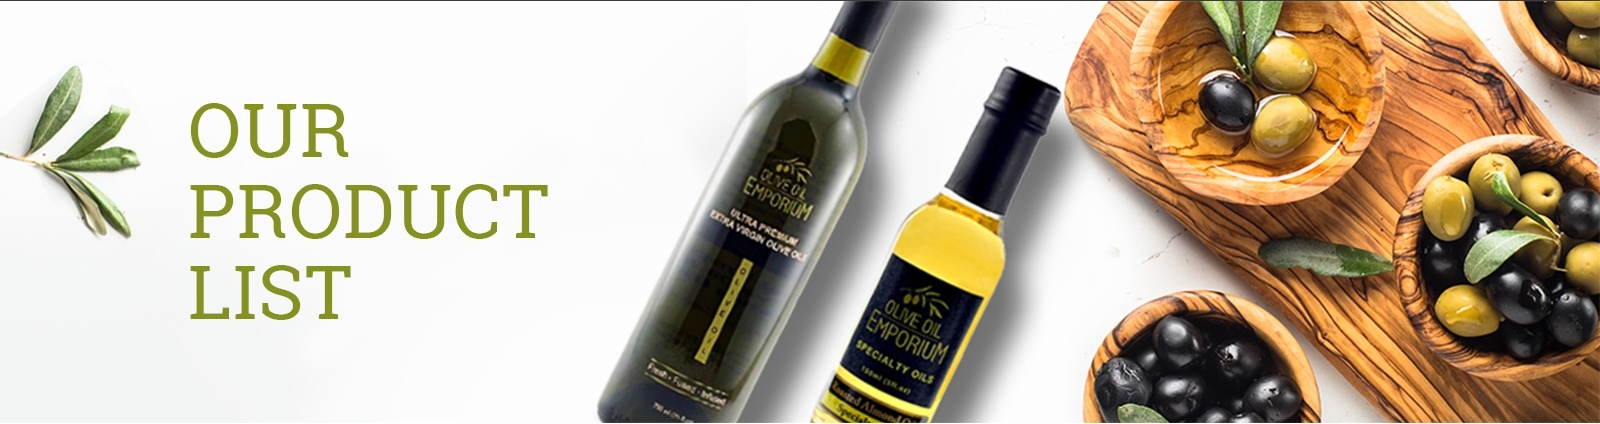 Our Product List - Olive Oil Emporium | Olive Oil and Vinegar Tasting Bar - Toronto